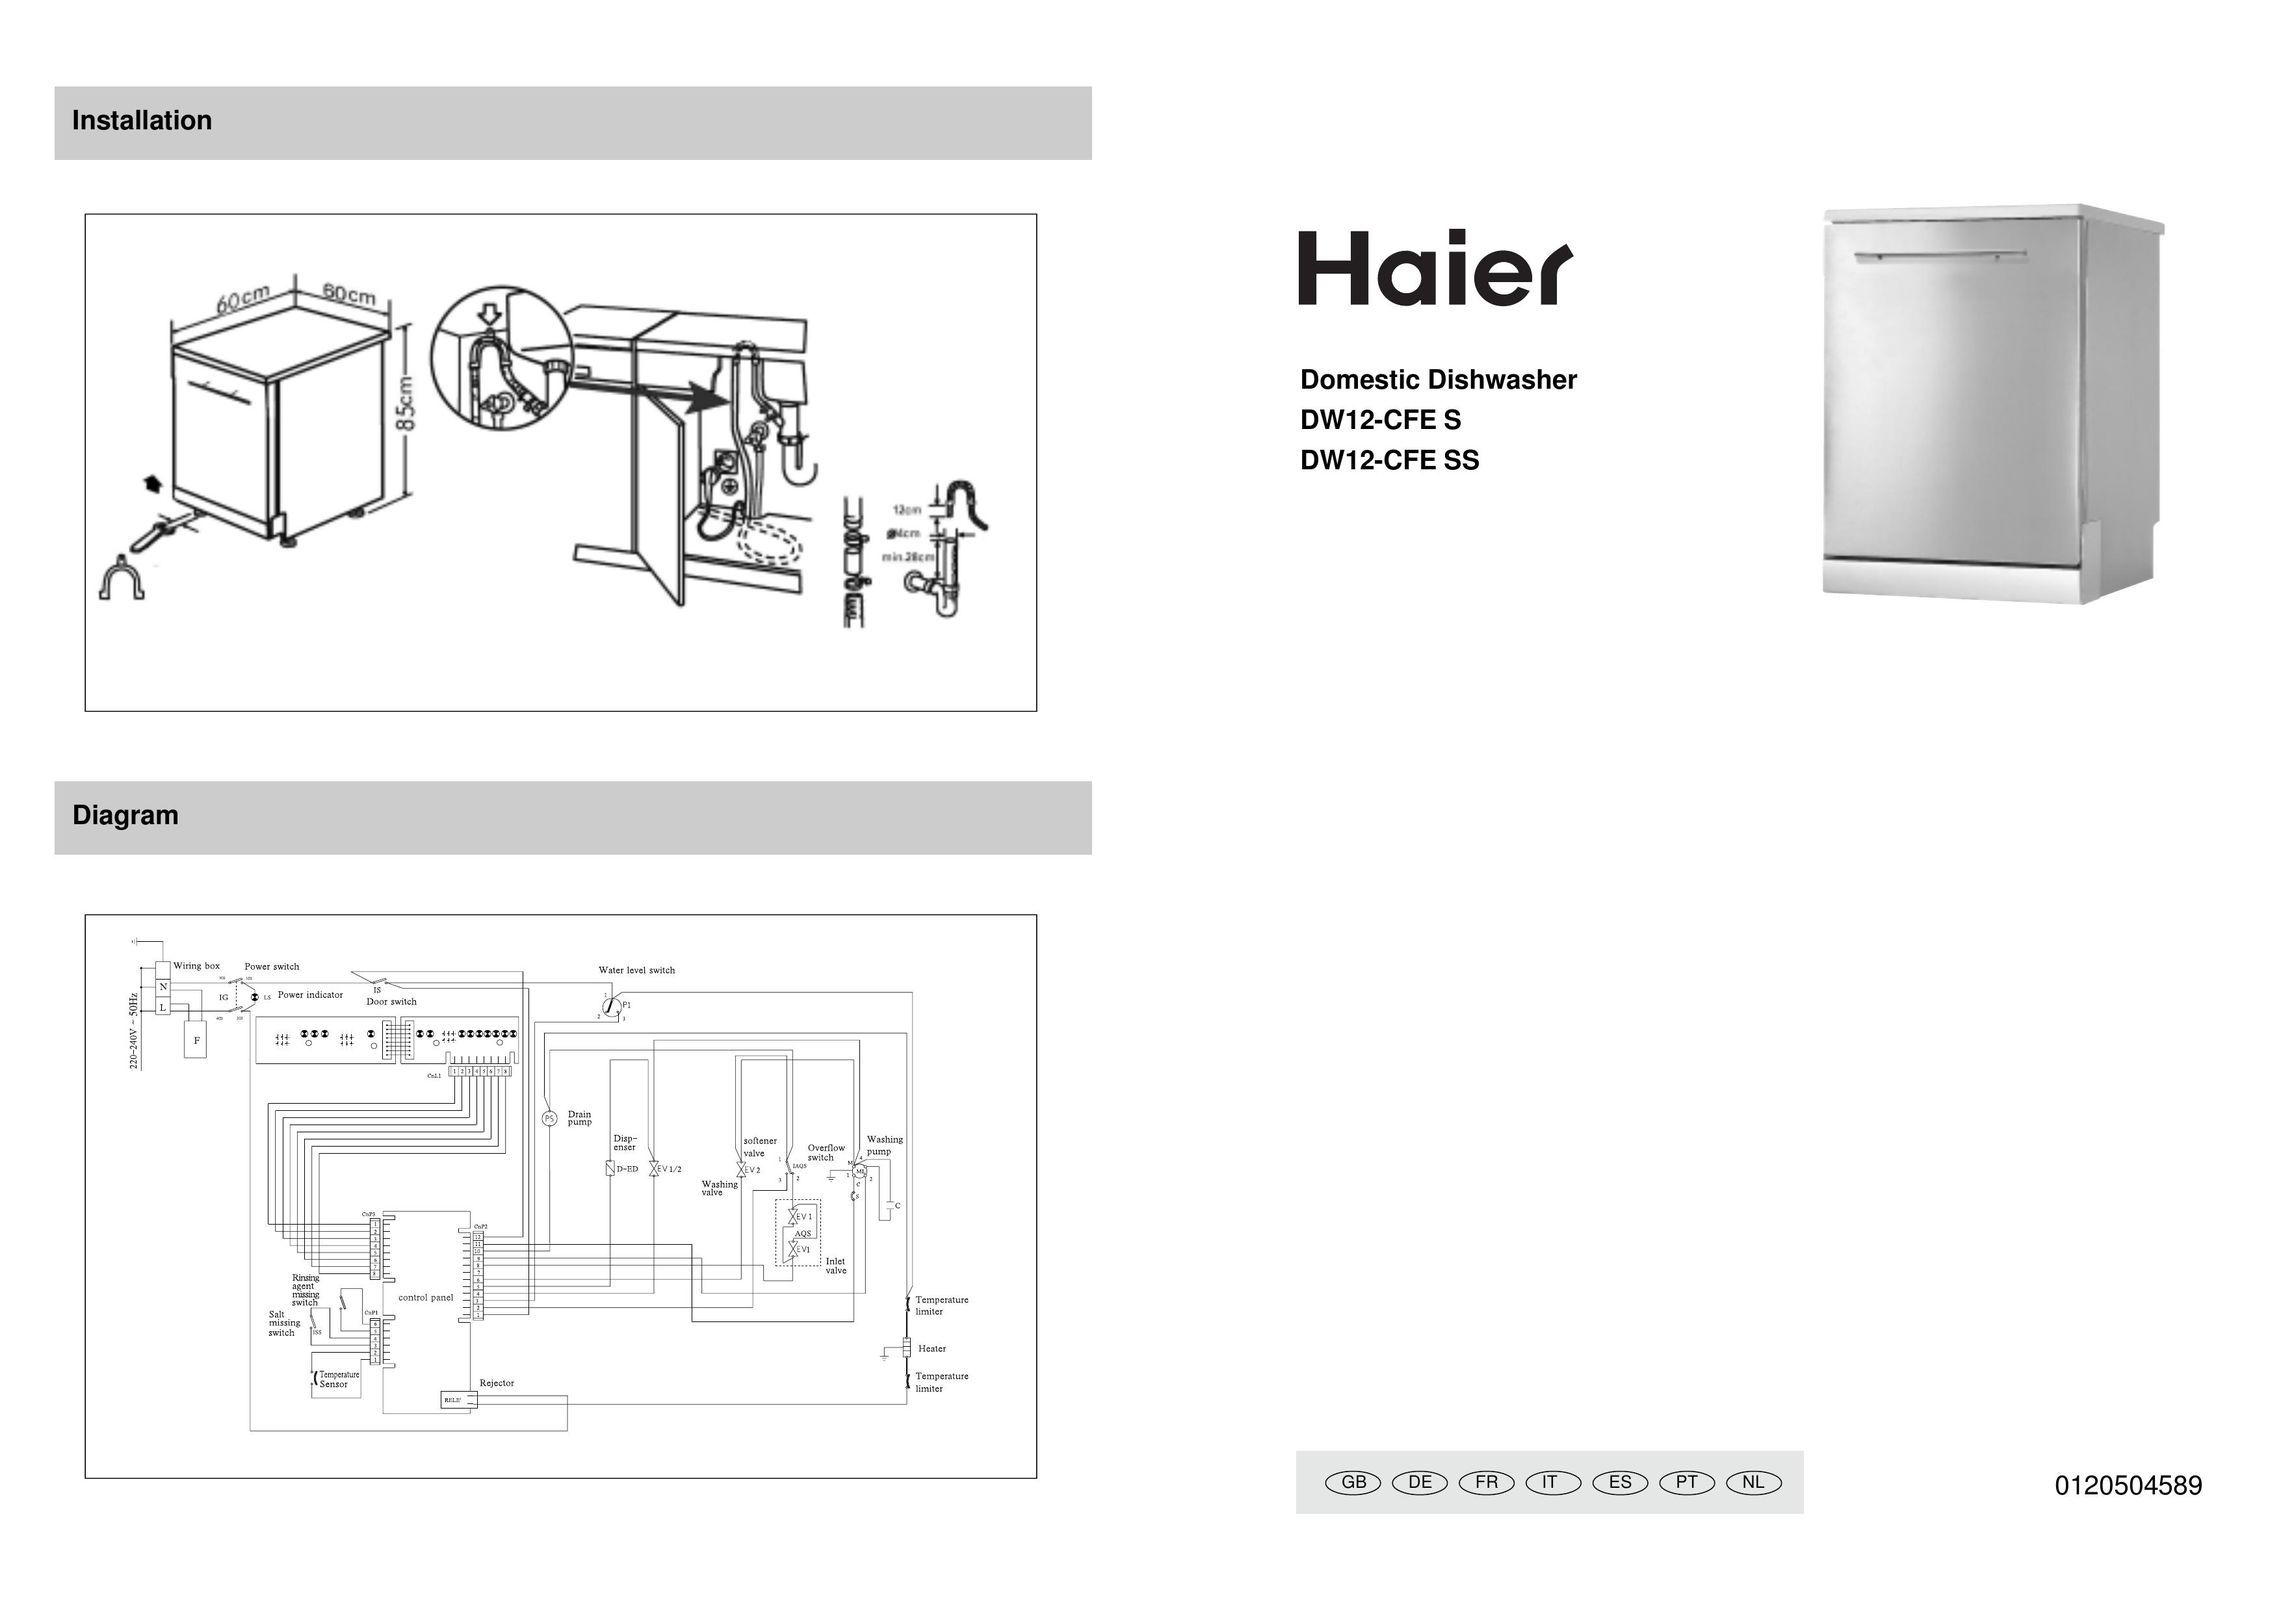 Haier DW12-CFE SS Dishwasher User Manual